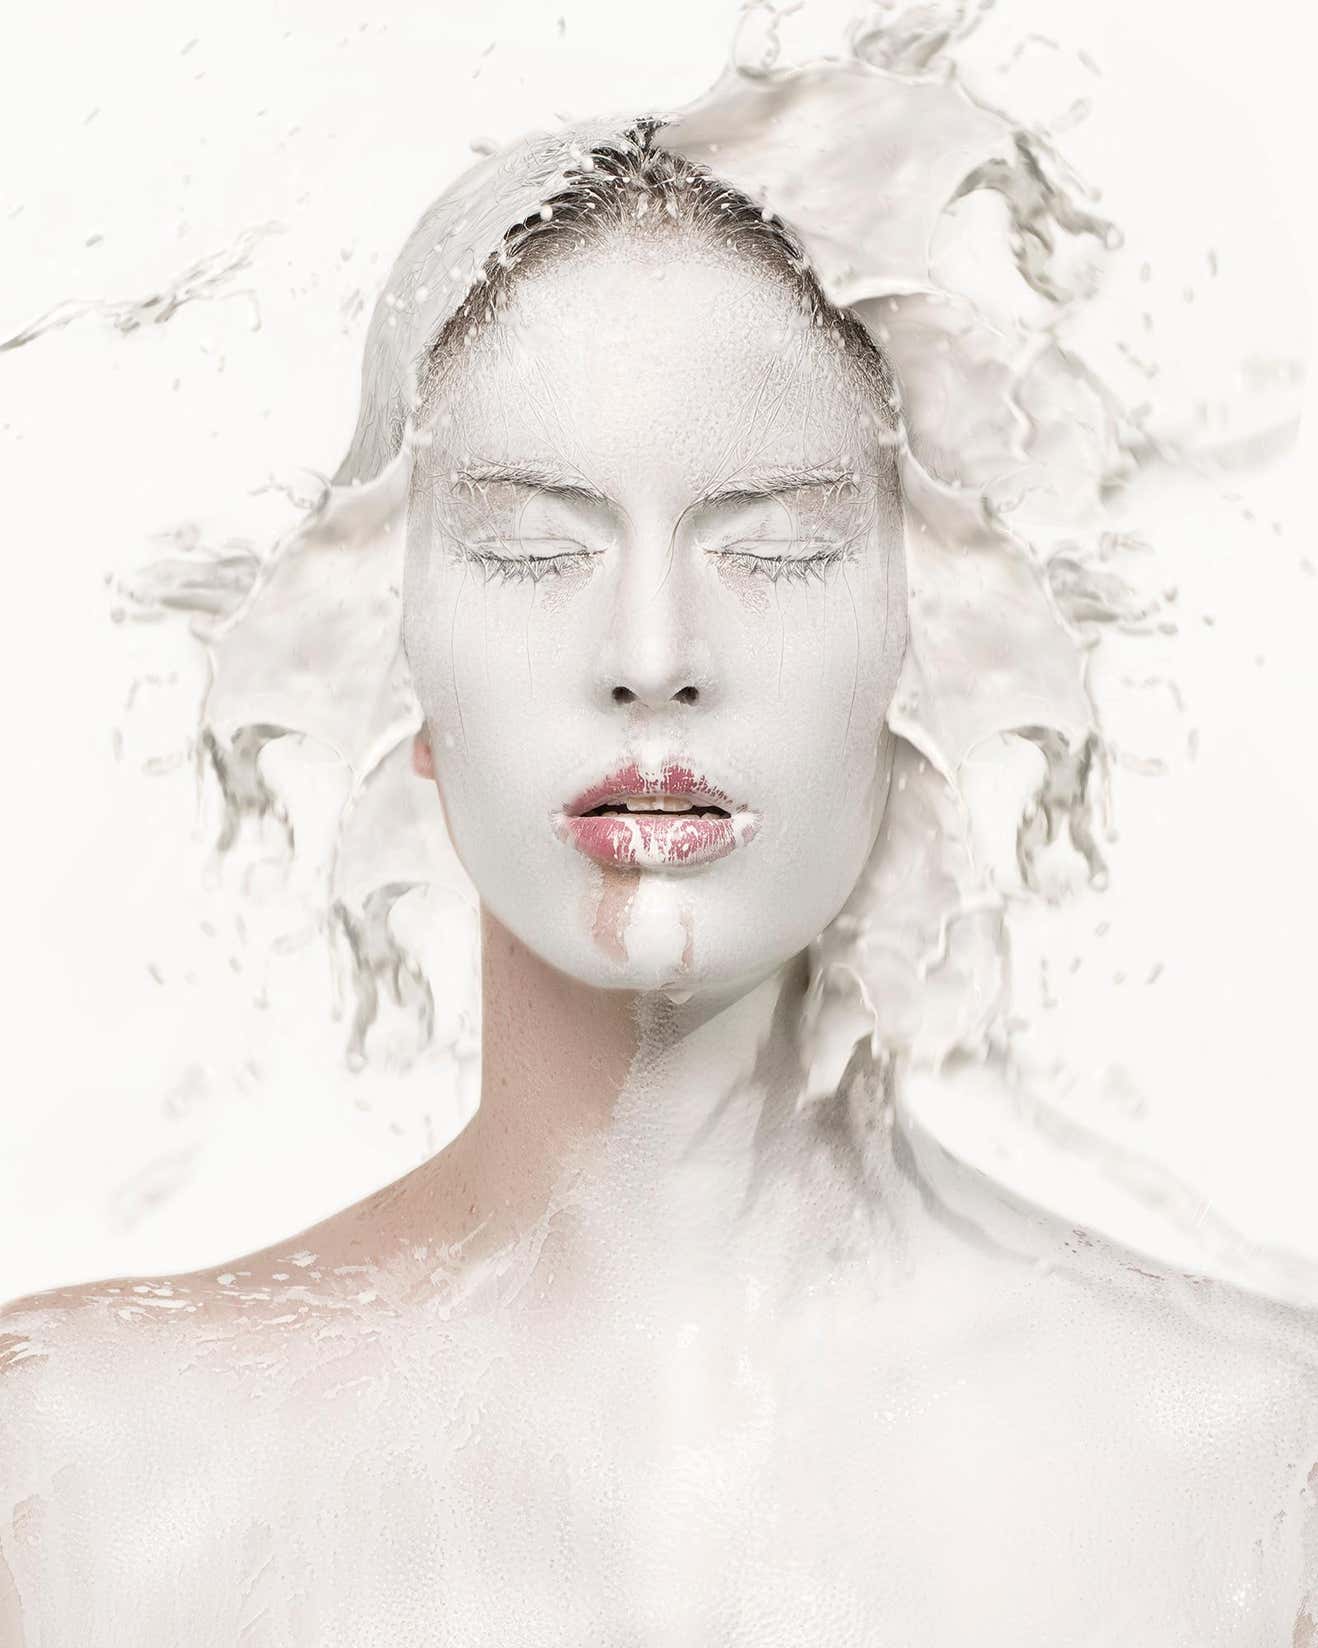 Milk One by Sylvie Blum, portrait of model with white painted face, white liquid splashing around her head